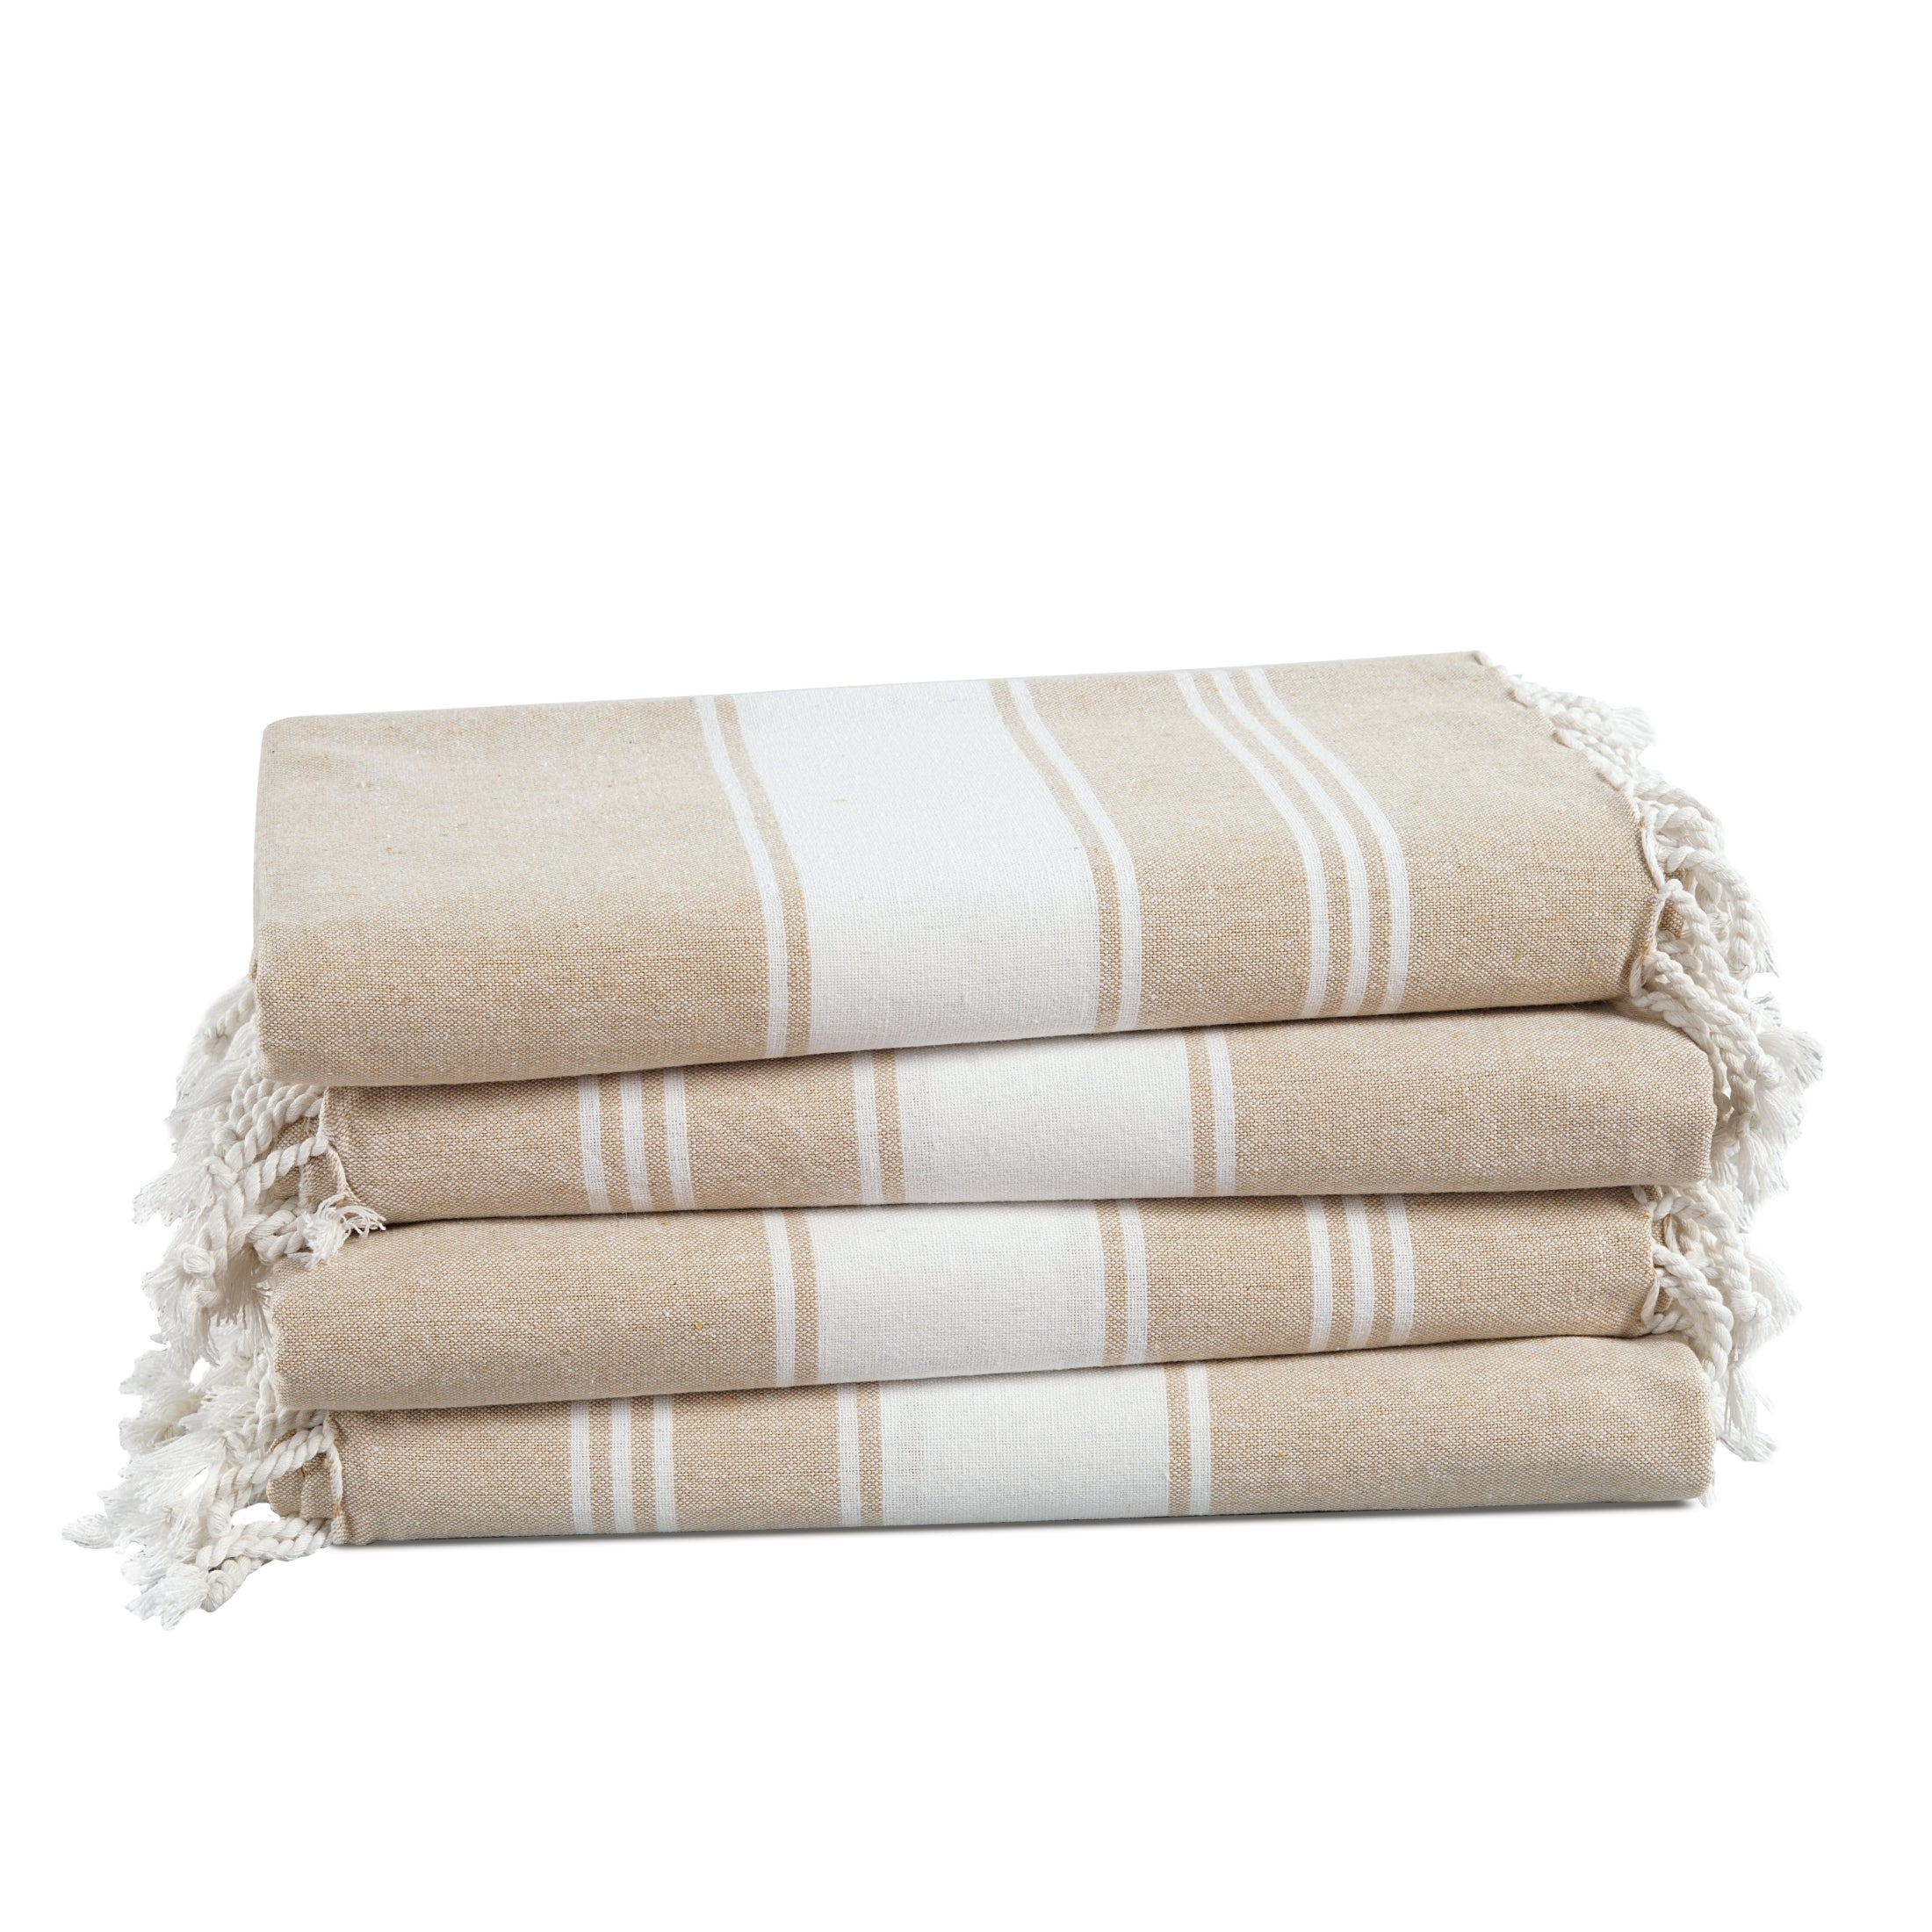 Set of 4 100% Cotton Chambray Turkish Beach Towels - Beige